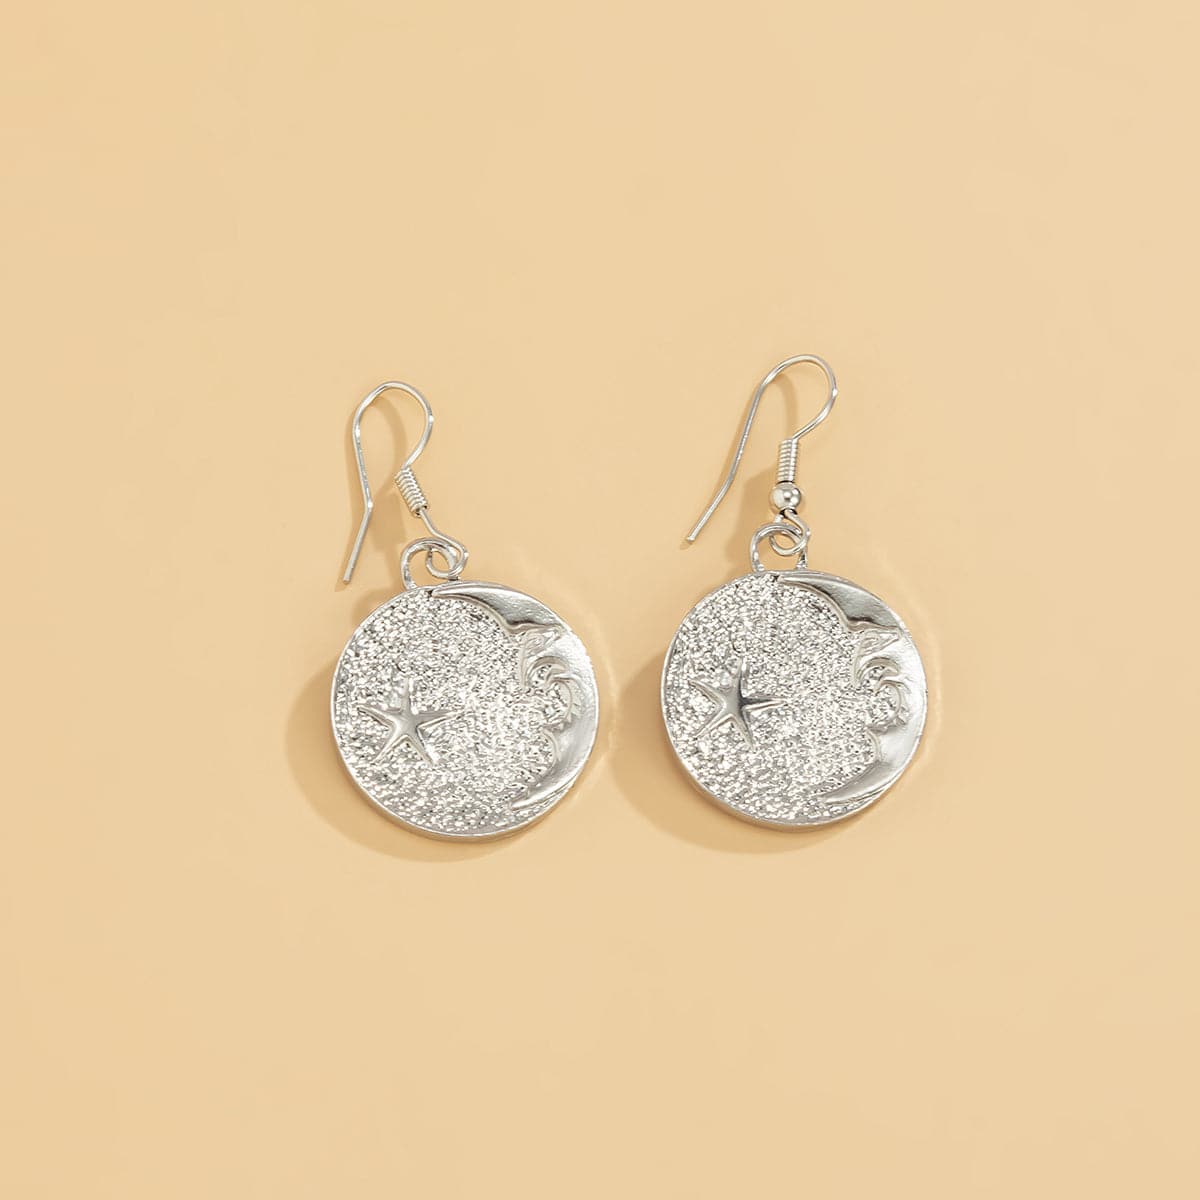 Silver-Plated Moon & Star Disc Drop Earrings